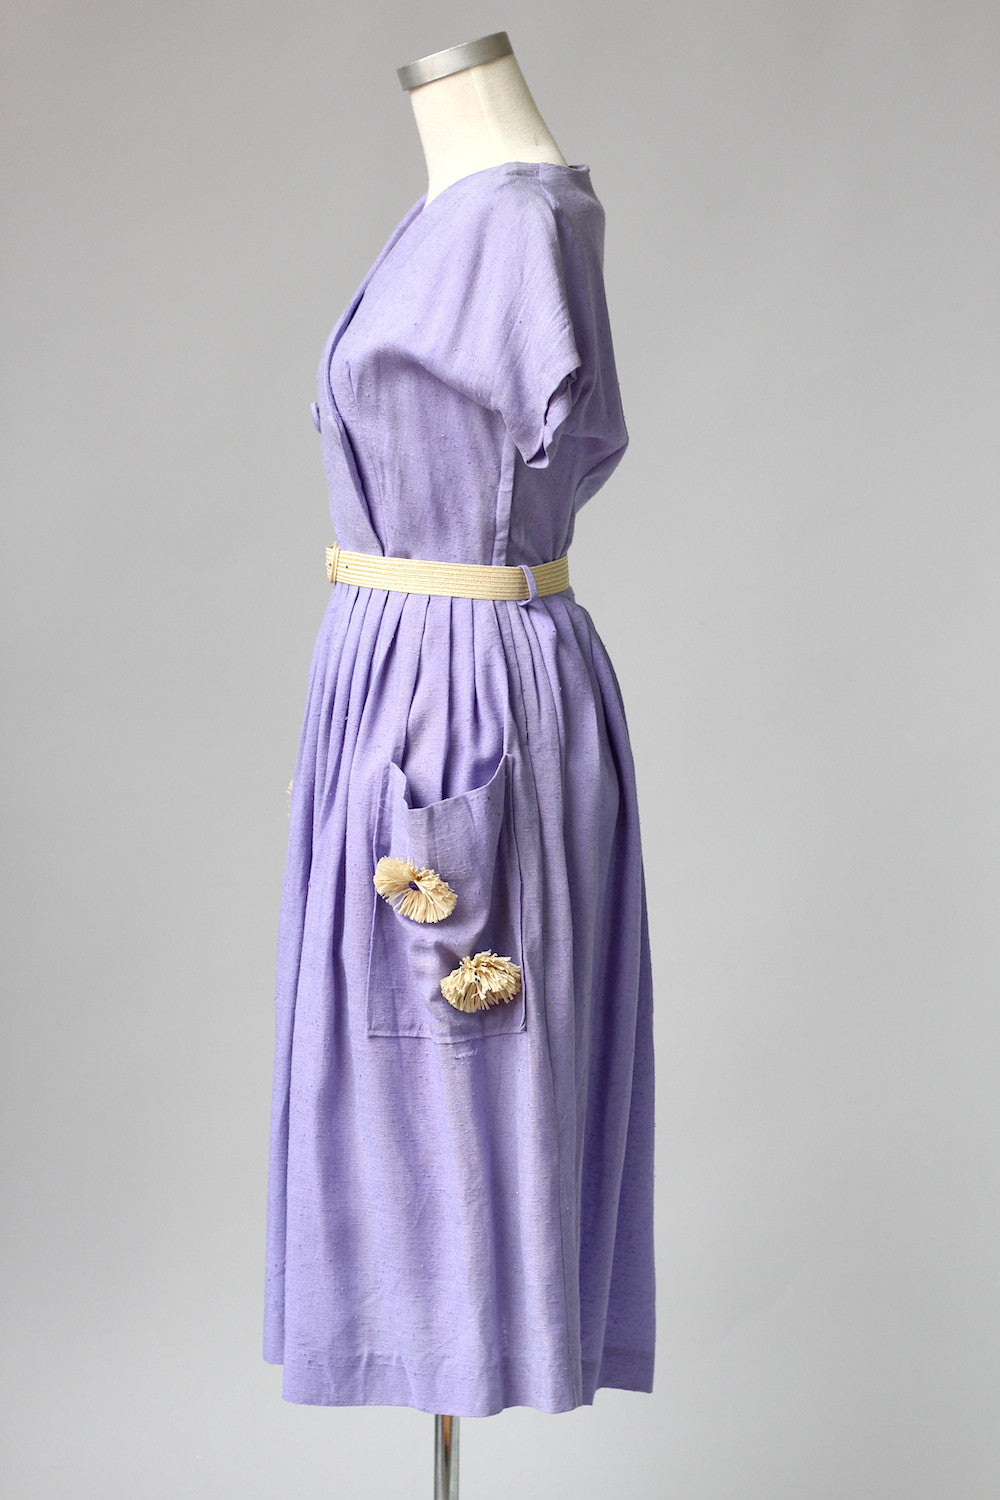 Gone Flower Pickin' Lavender 1930s Day Dress